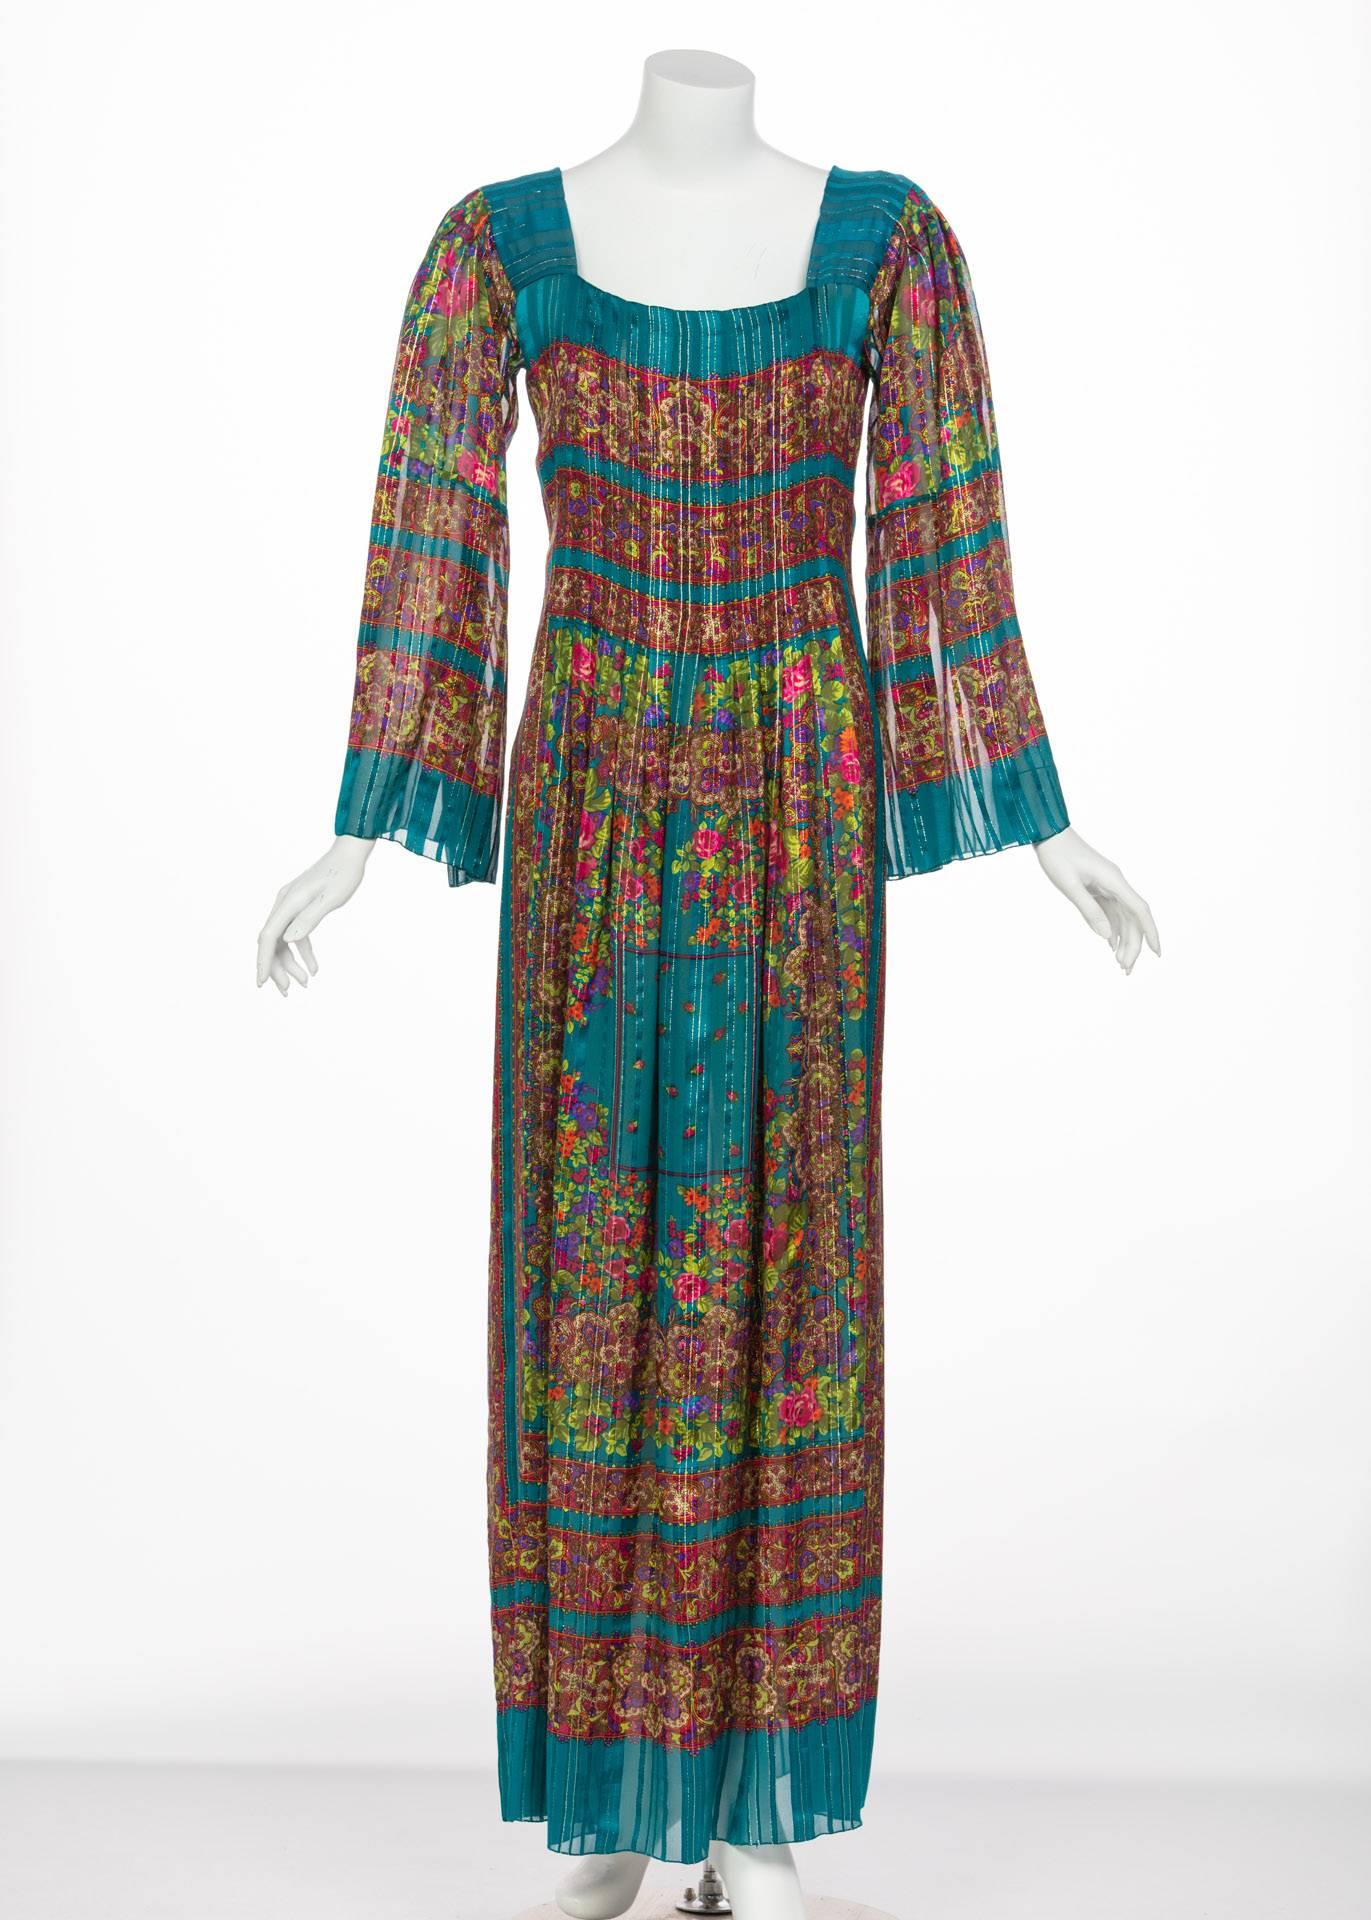 Pauline Trigere Silk Floral Metallic Bell Sleeve Caftan Maxi Dress, 1970s 4